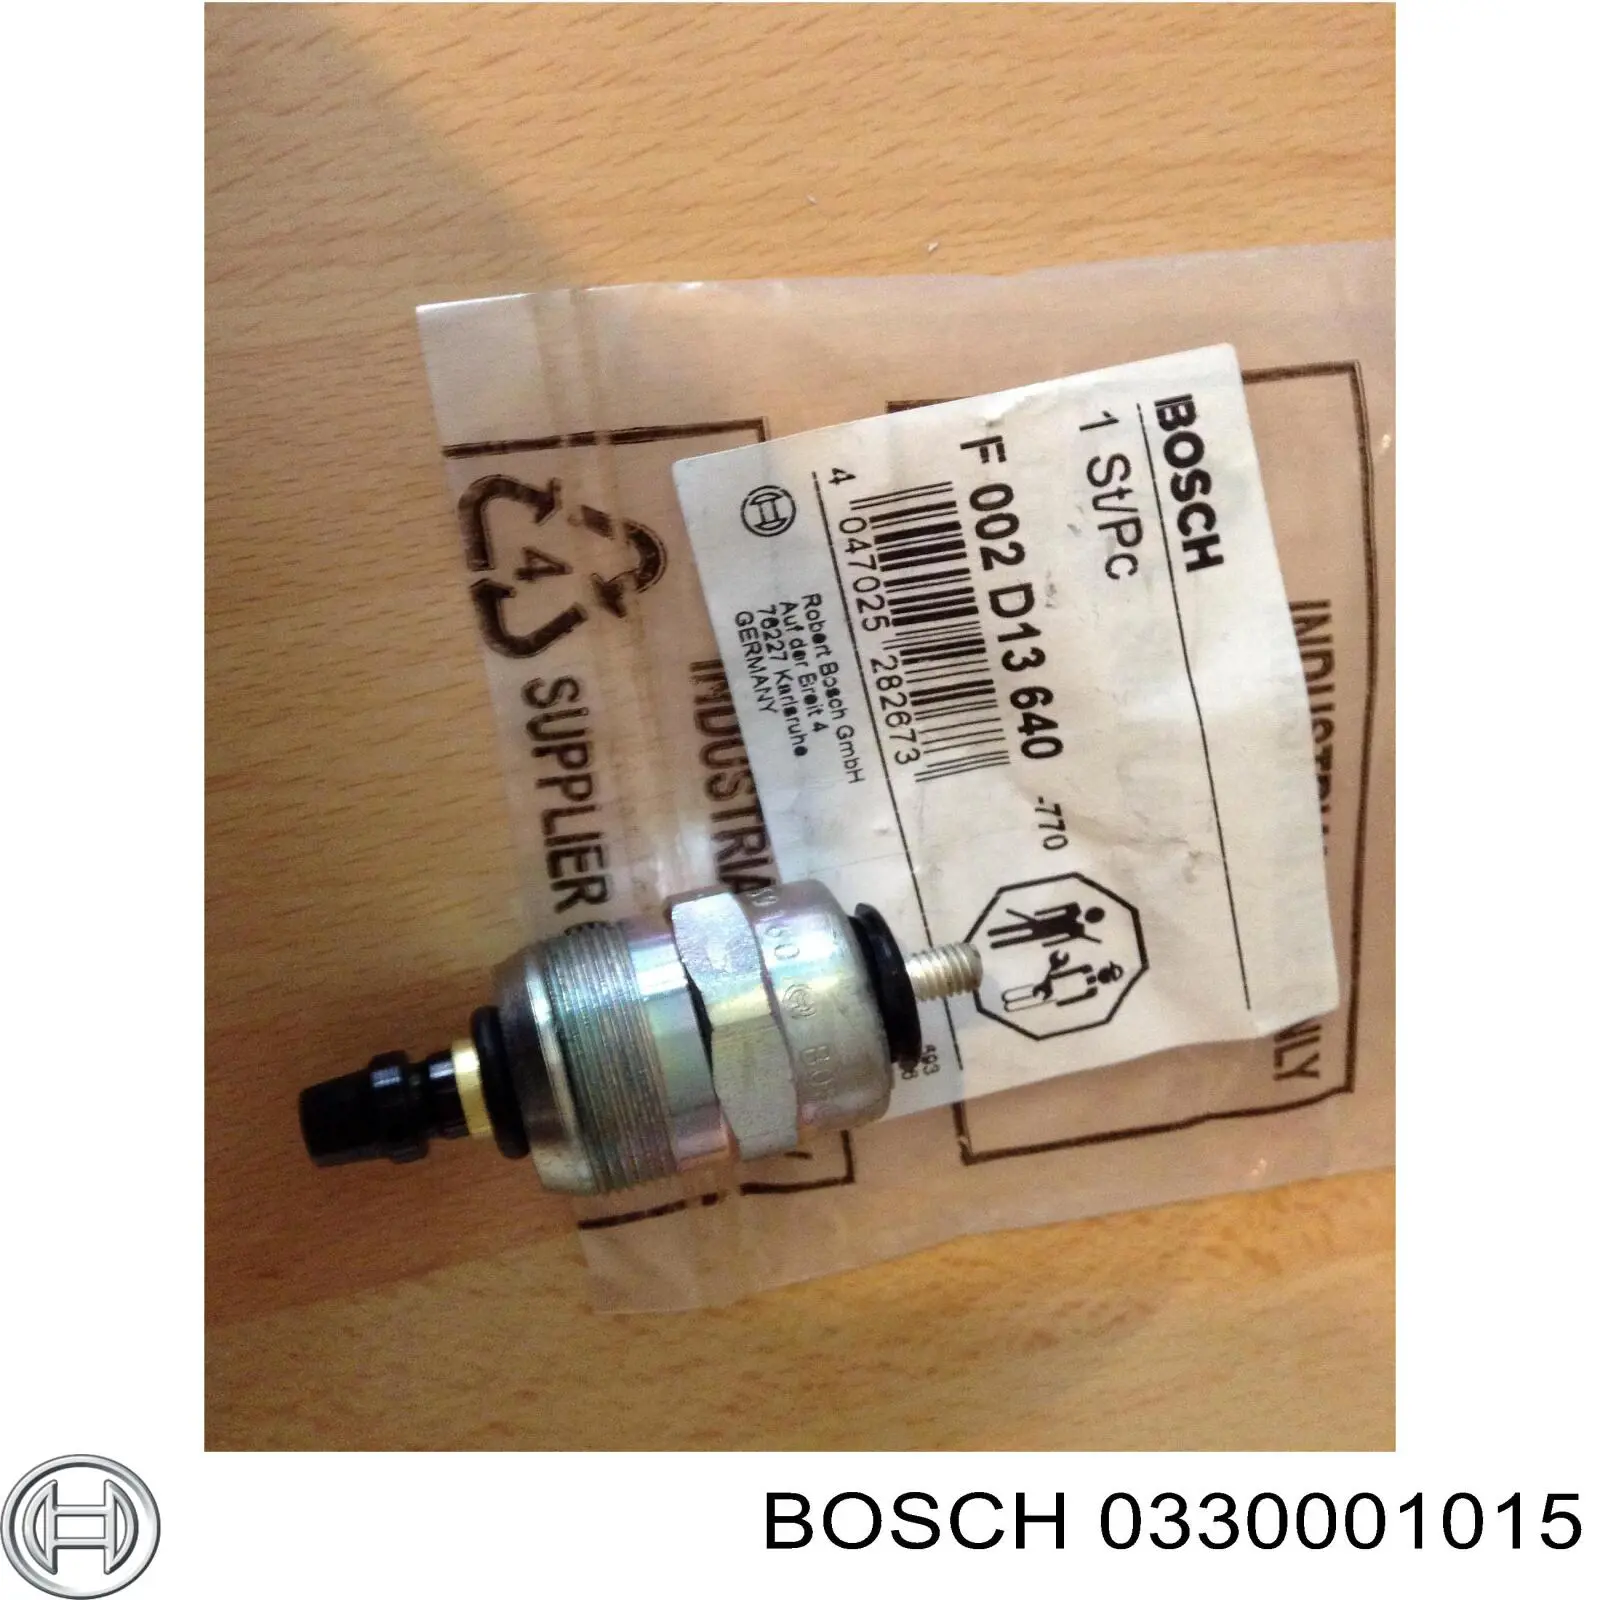 0330001015 Bosch клапан тнвд отсечки топлива (дизель-стоп)